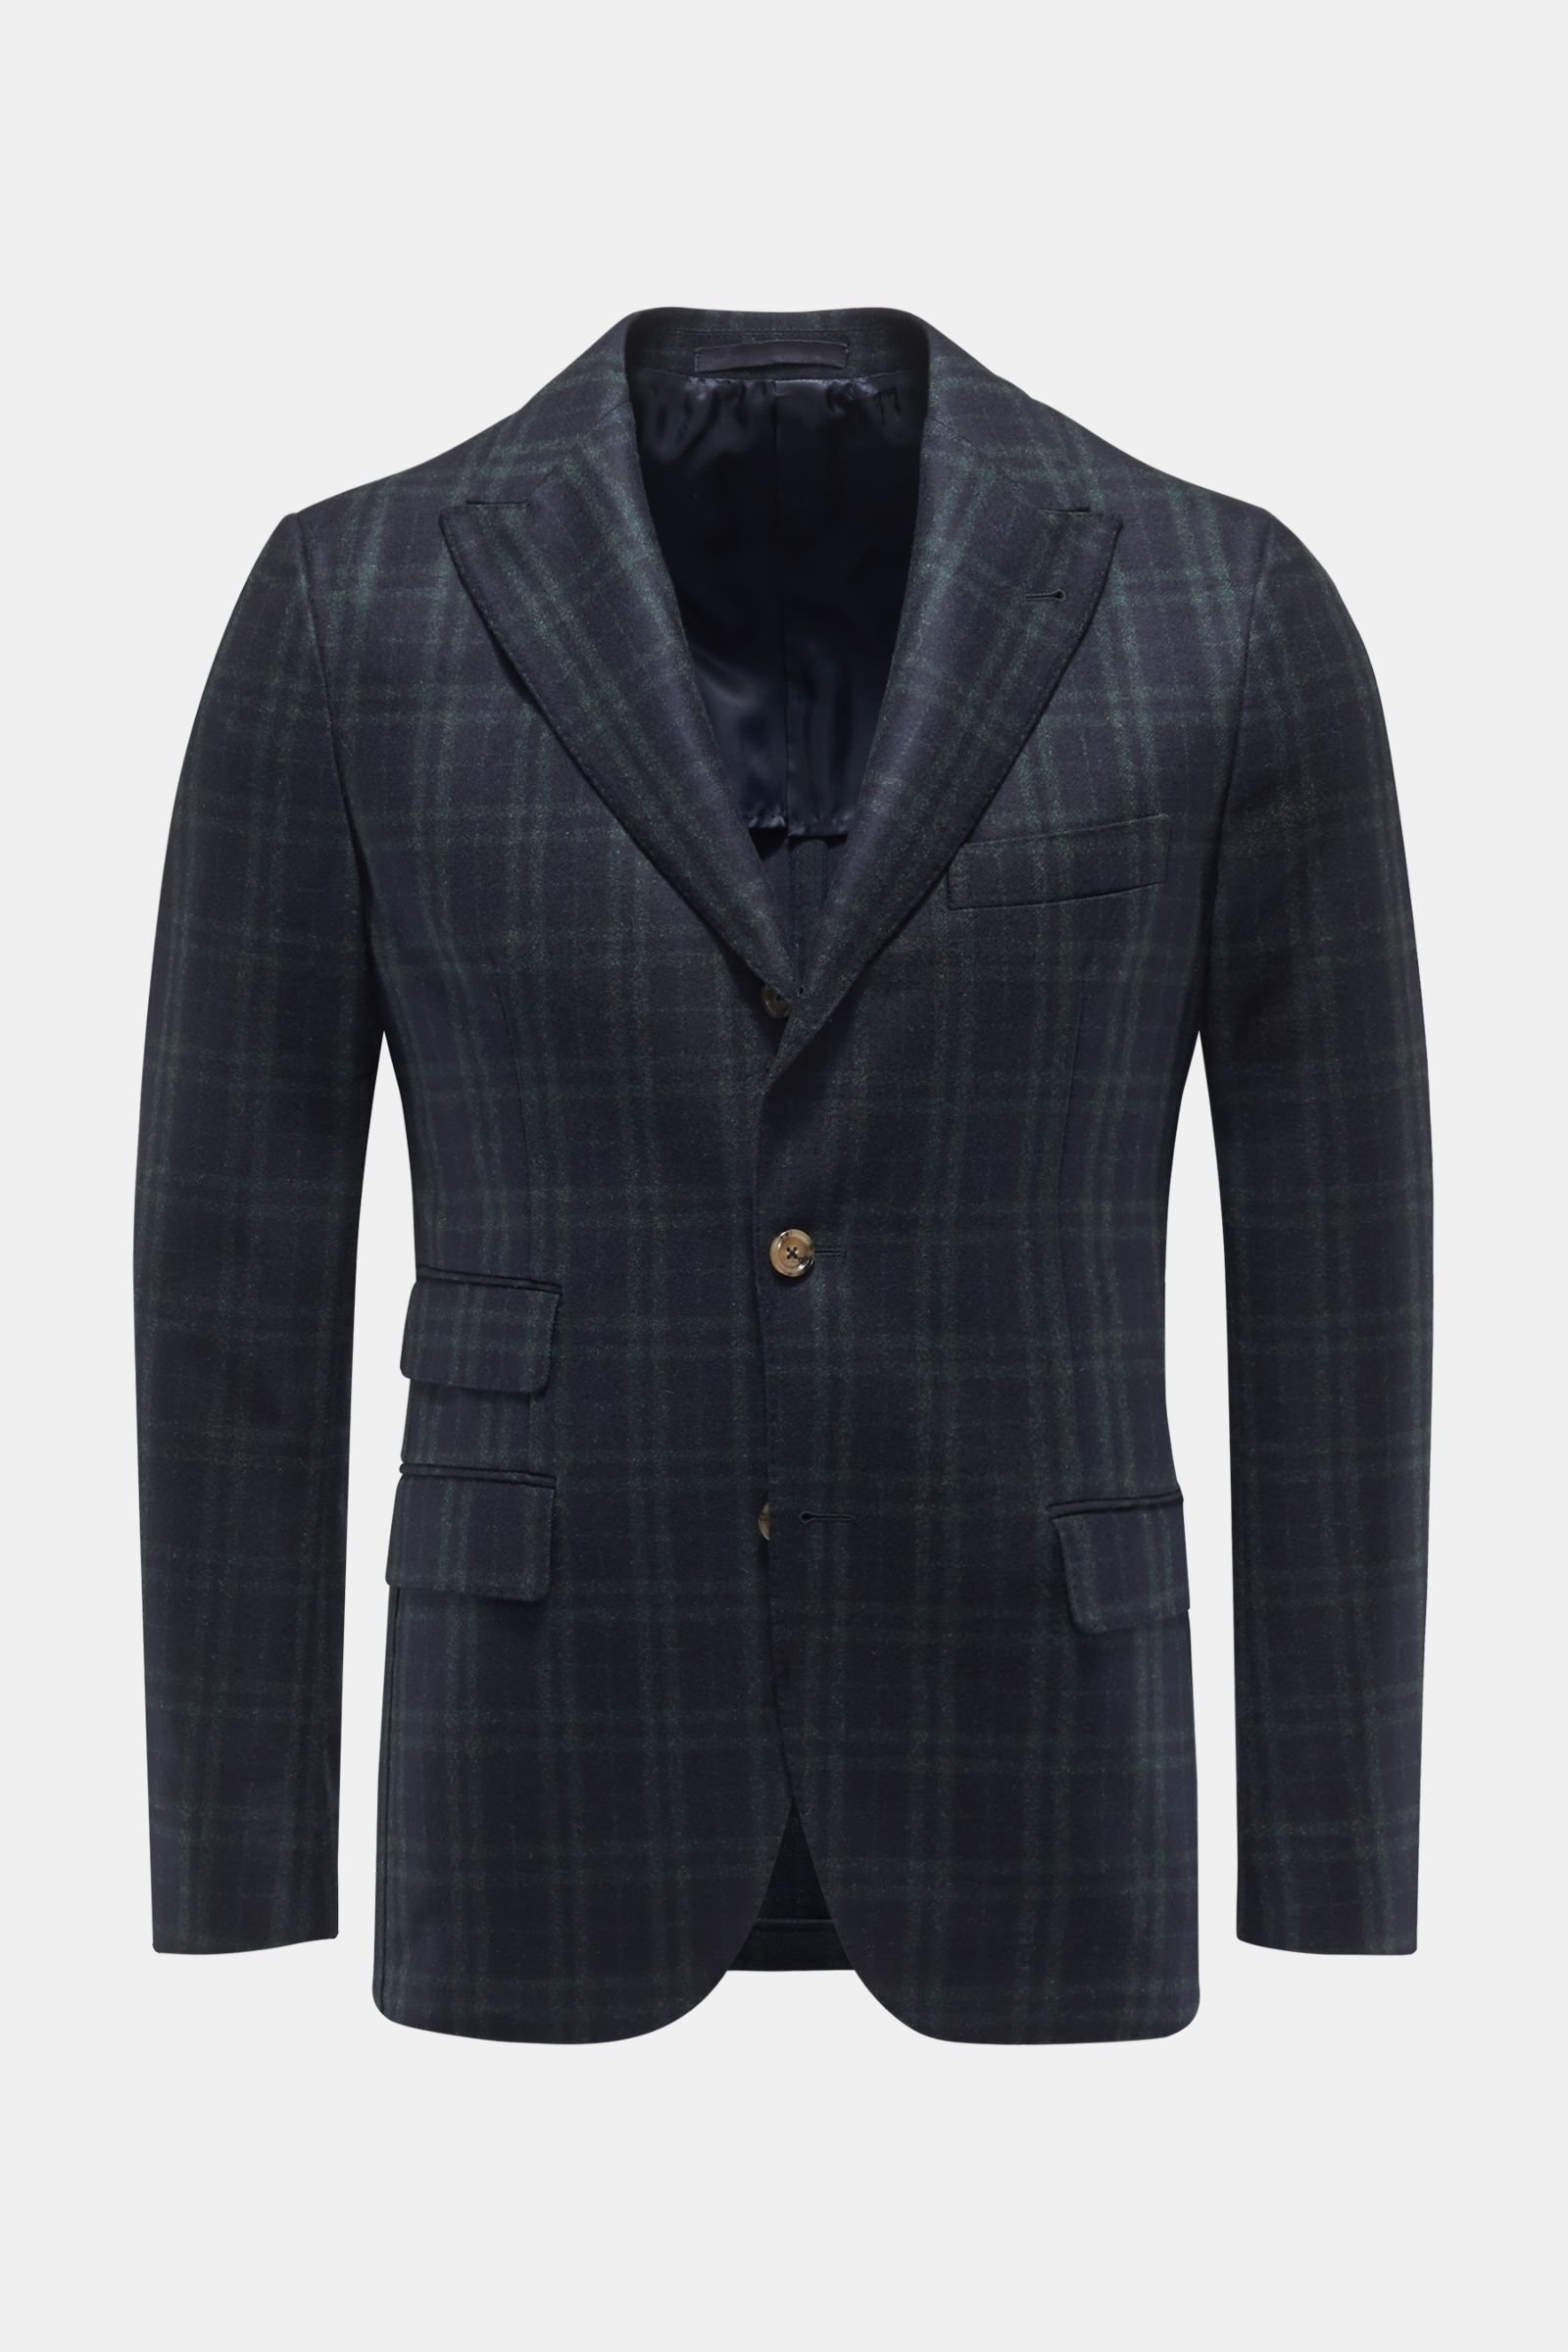 Smart-casual jacket navy/grey green checked